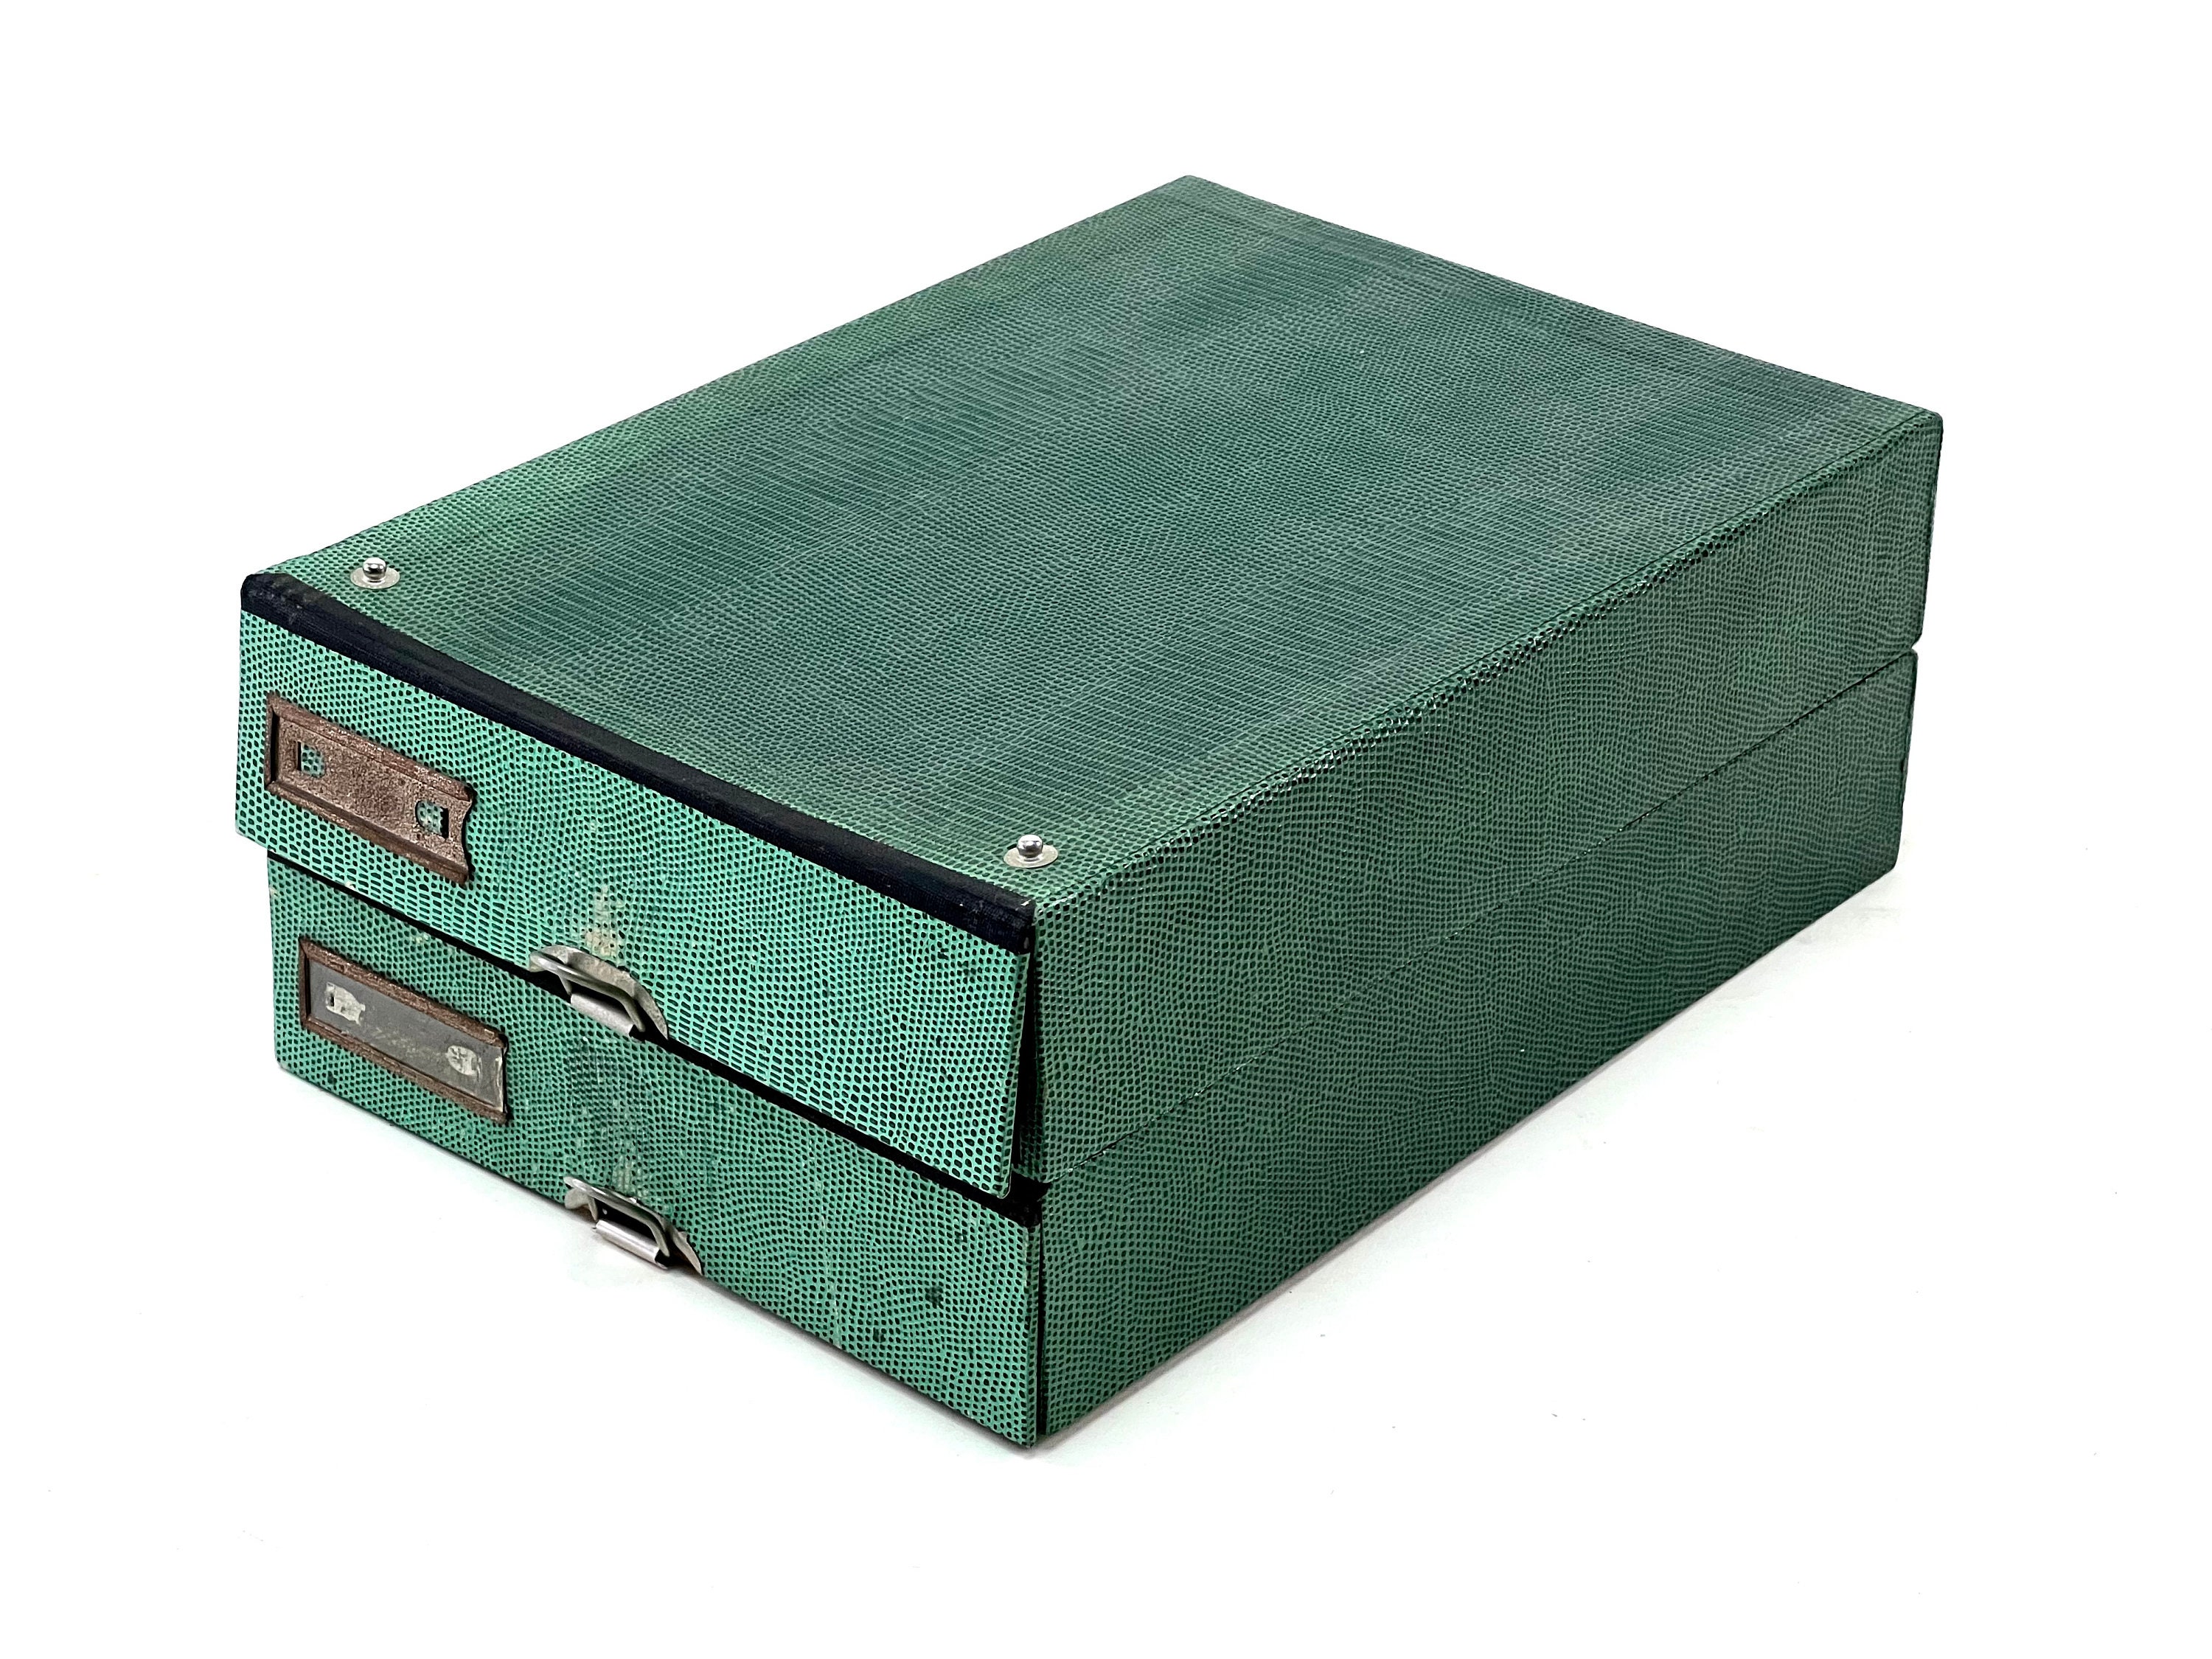 Zebra 5x7 Platesafe Archive & Storage Box for Wet or Dry Plates  /ferrotypes,wet Plates, Dry Plates, Ambrotypes, Collodion, Tintypes 